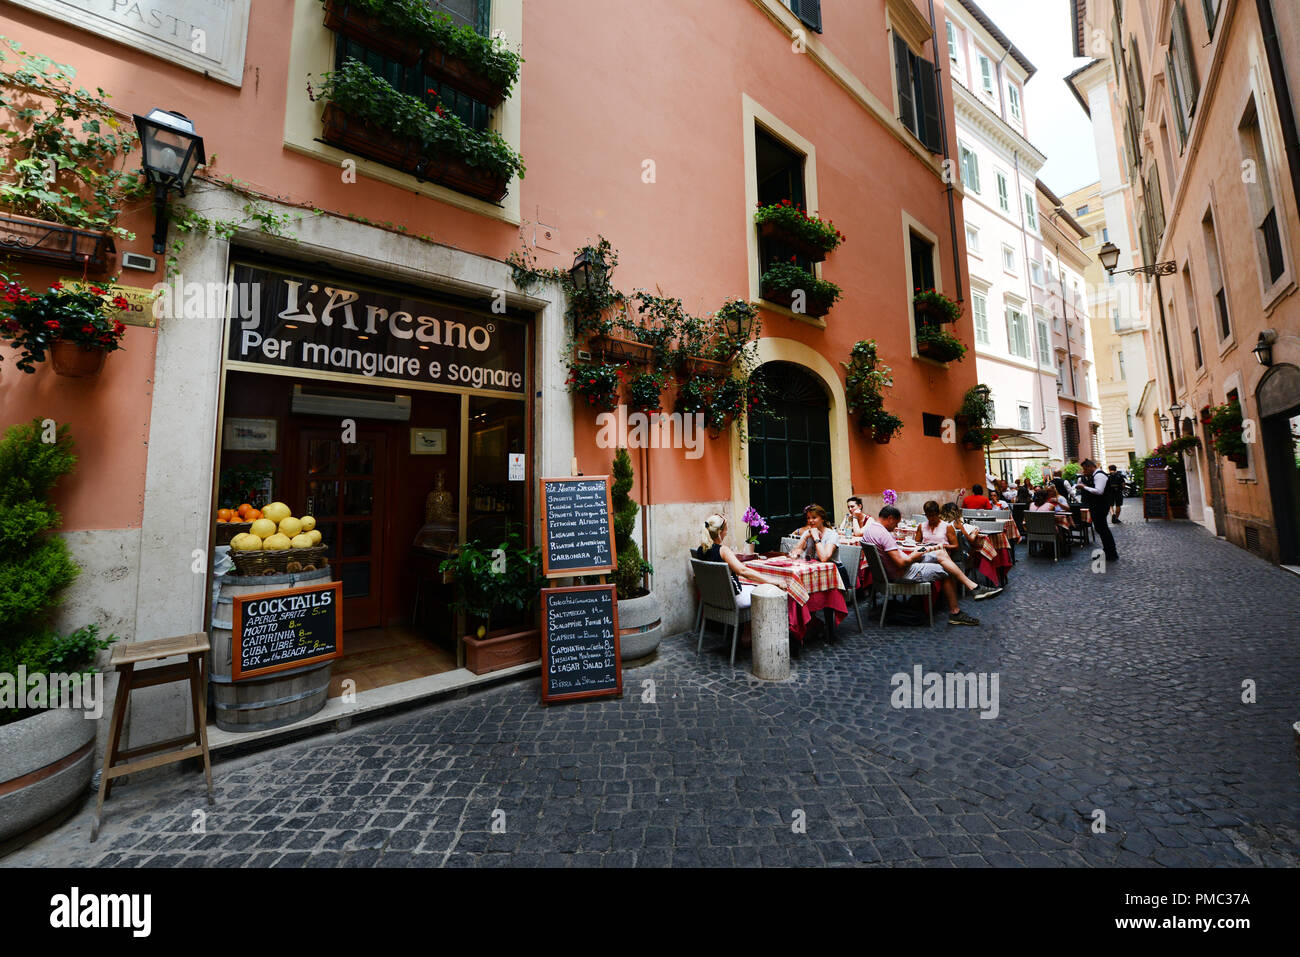 L'Arcano restaurant on Via delle Paste in Rome. Stock Photo